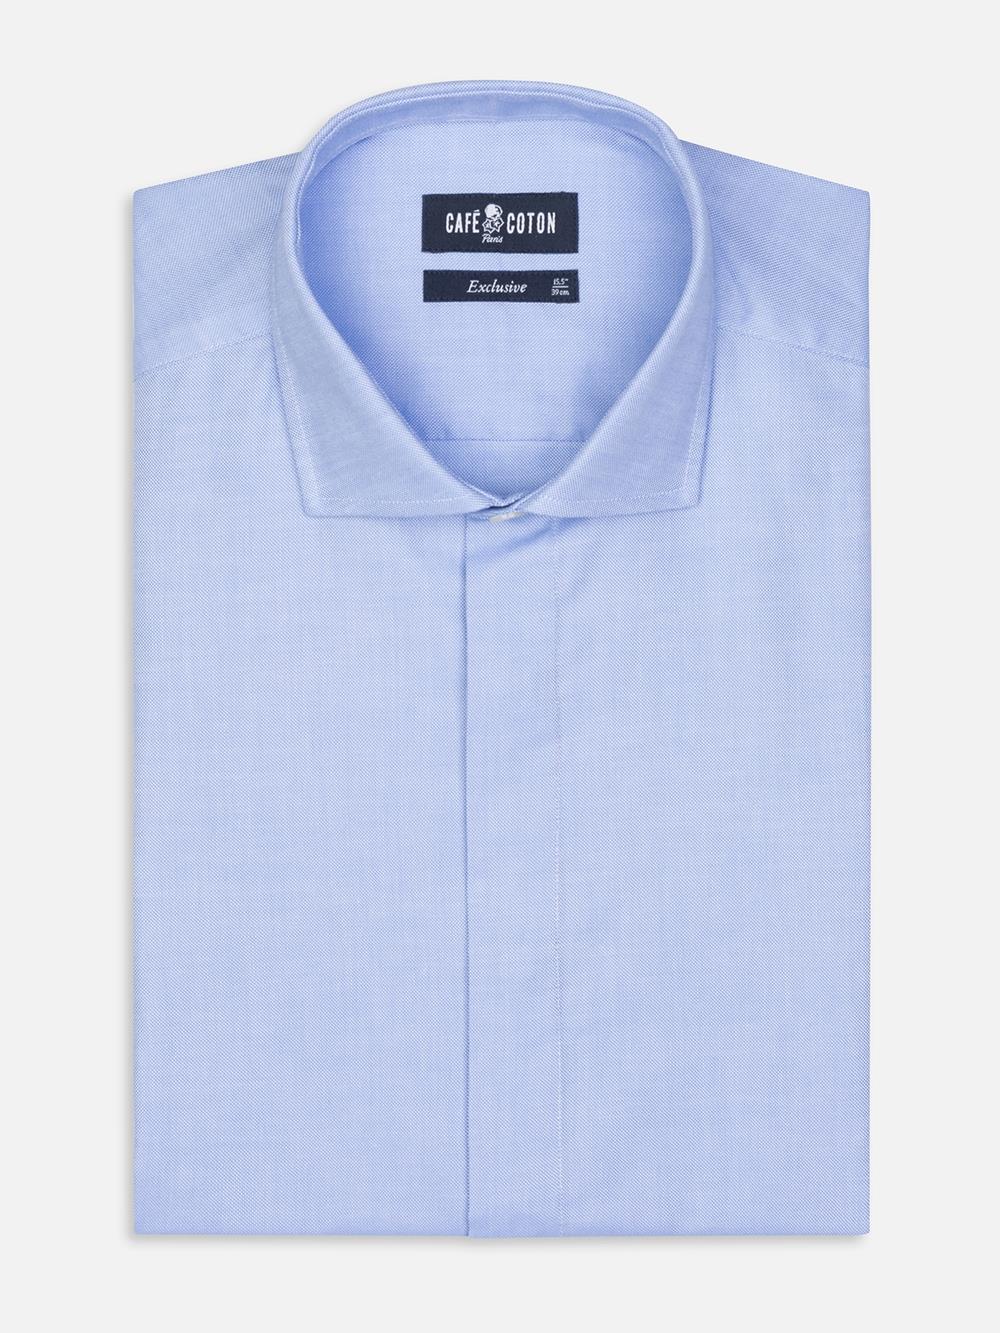 Oxfordhemd himmelblau - Verdeckte Knopfleiste